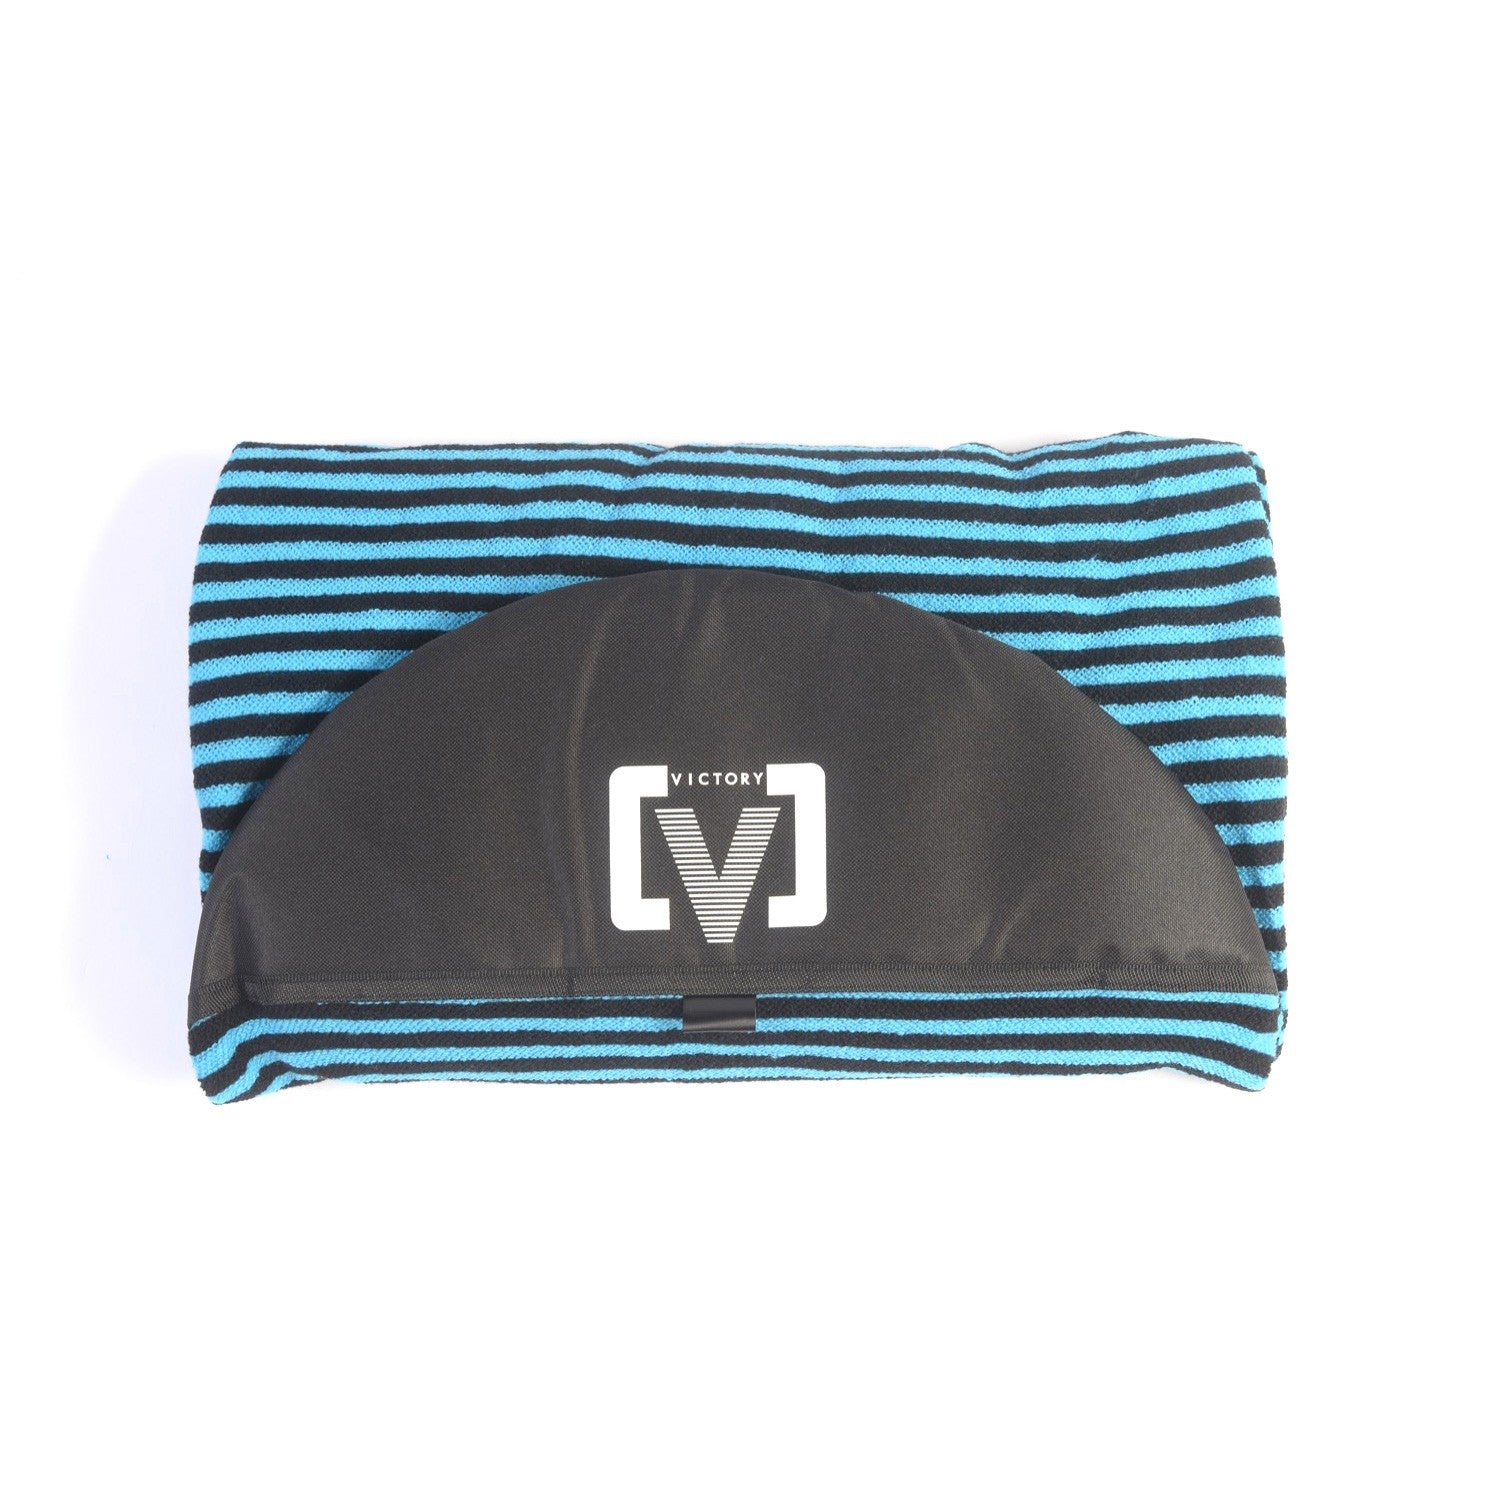 VICTORY - Longboard sock cover - 7'6 - Black / Blue